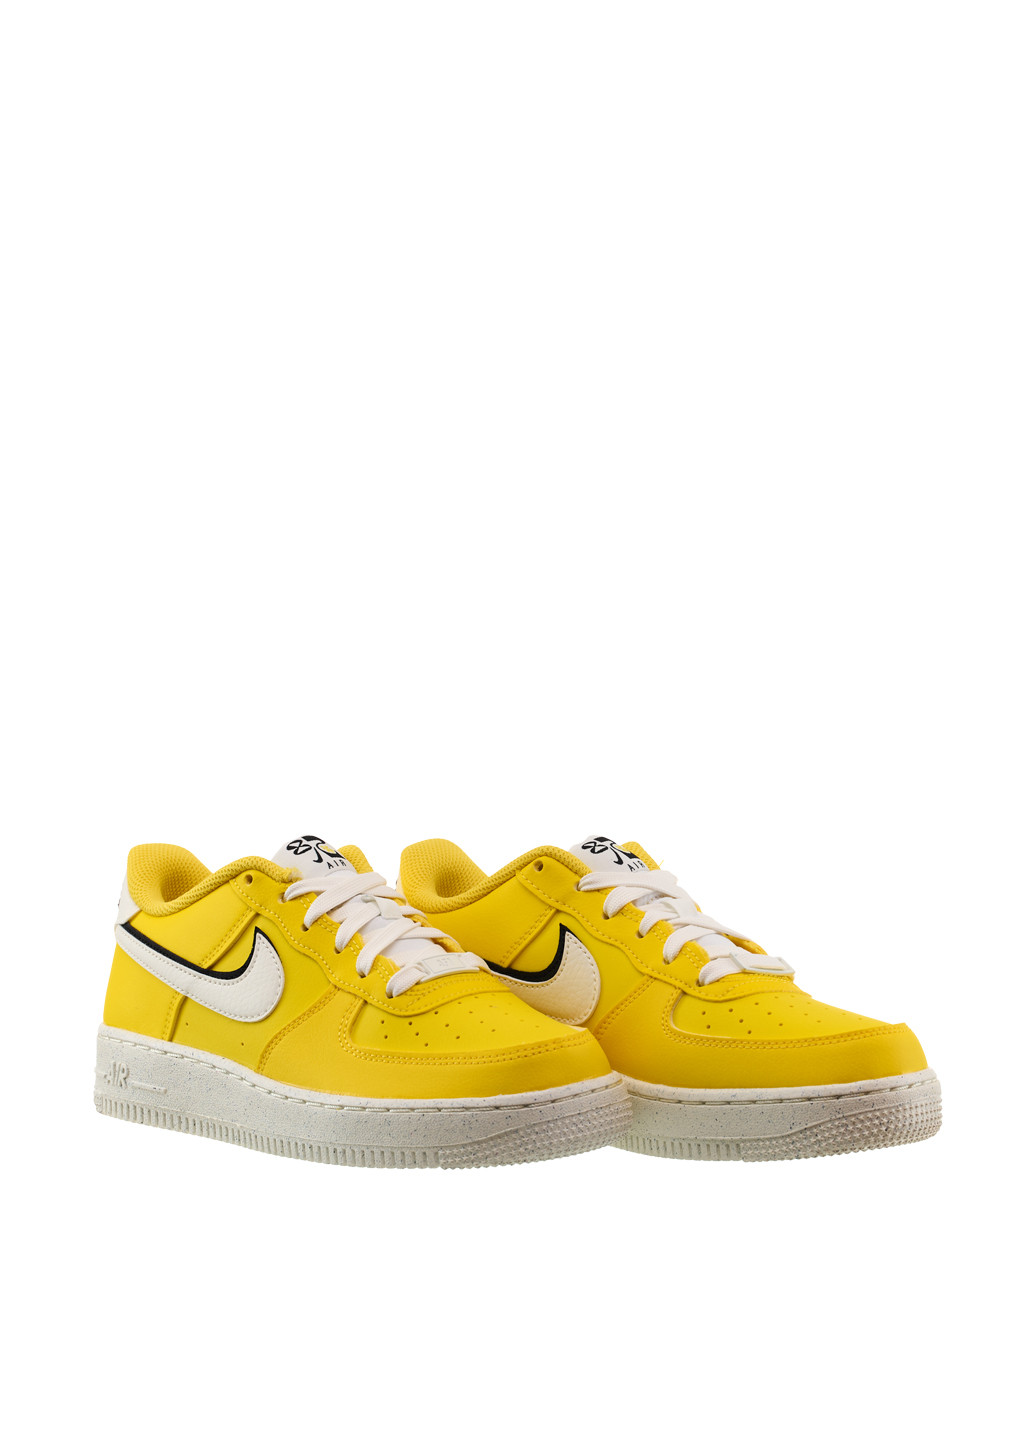 Жовті осінні кросівки dq0359-700_2024 Nike Air Force 1 LV8 Gs